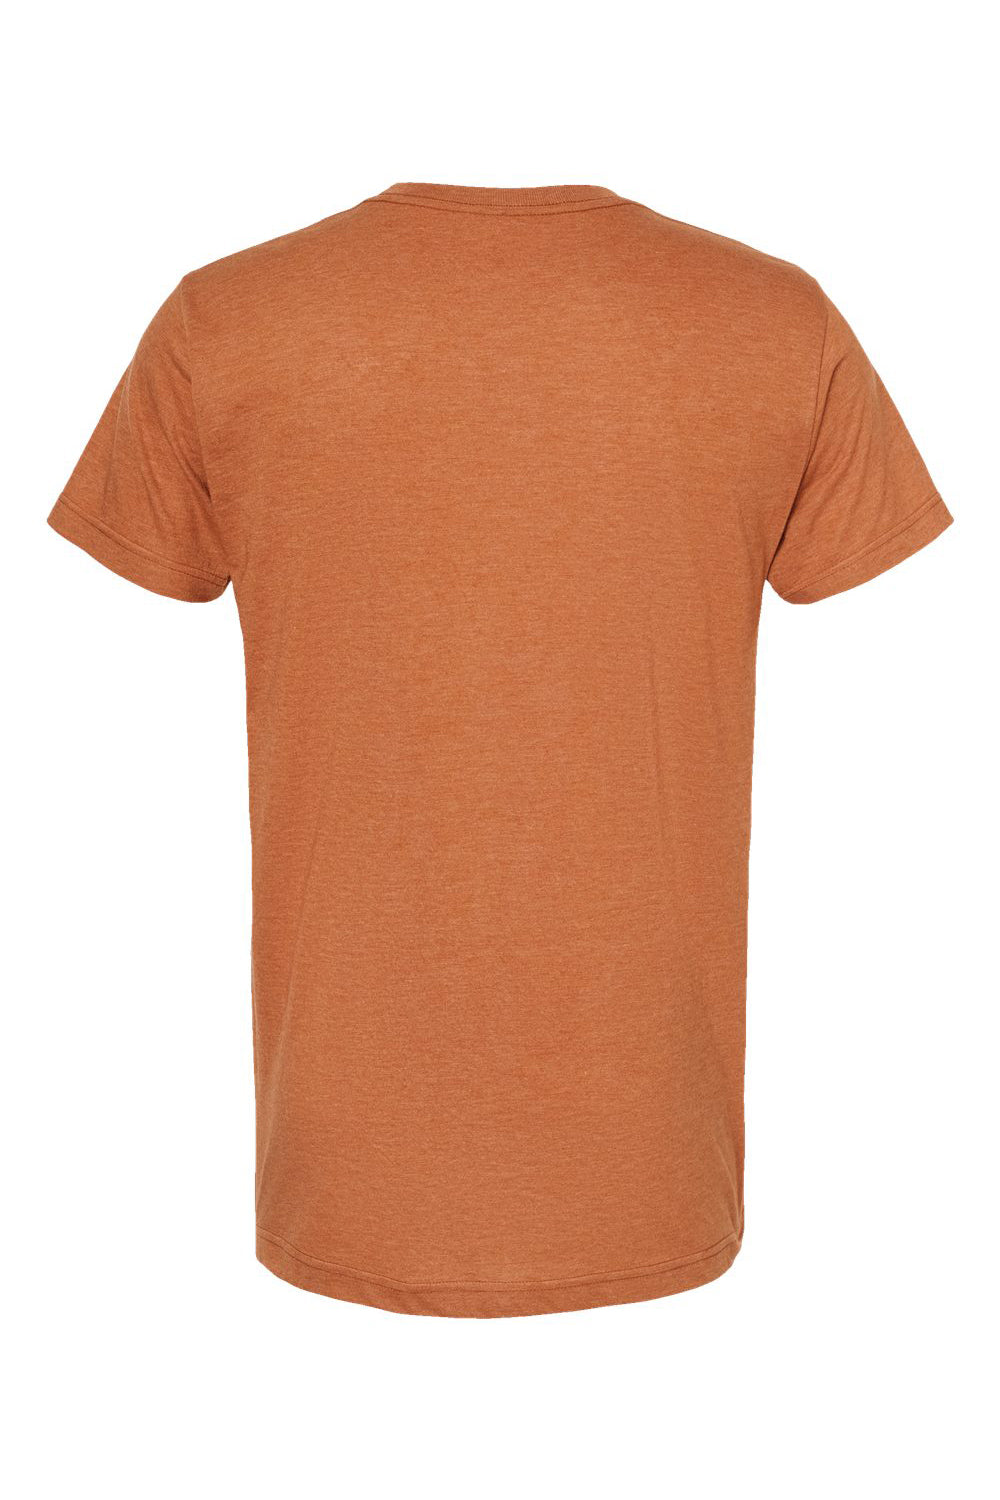 Tultex 202 Mens Fine Jersey Short Sleeve Crewneck T-Shirt Heather Rust Orange Flat Back